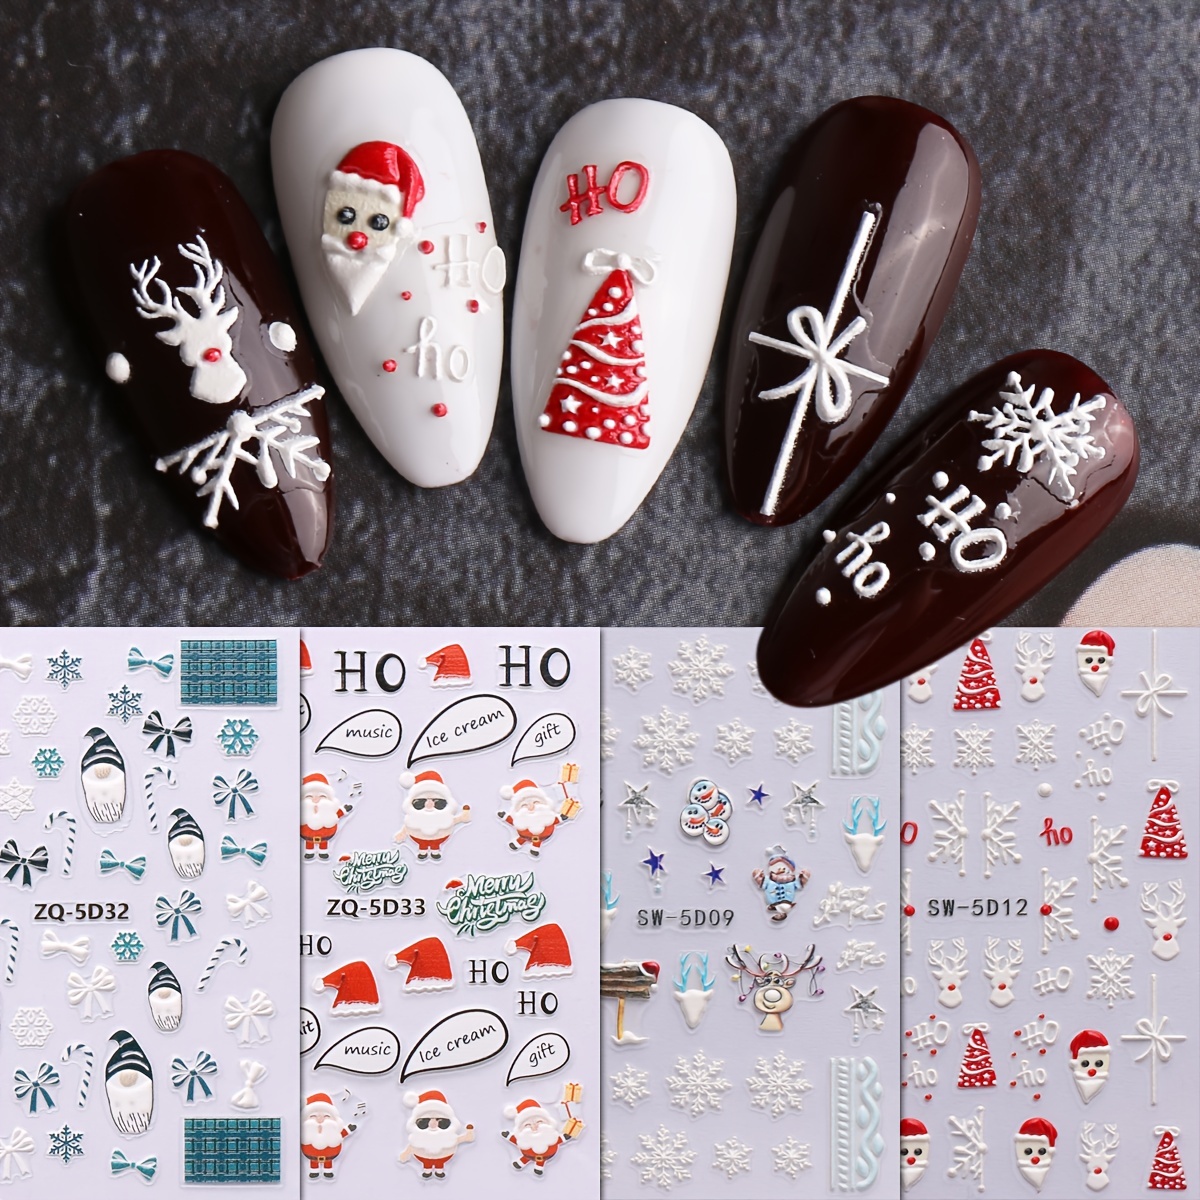 5d Embossed Christmas Nail Art Stickers,self Adhesive Snowflake